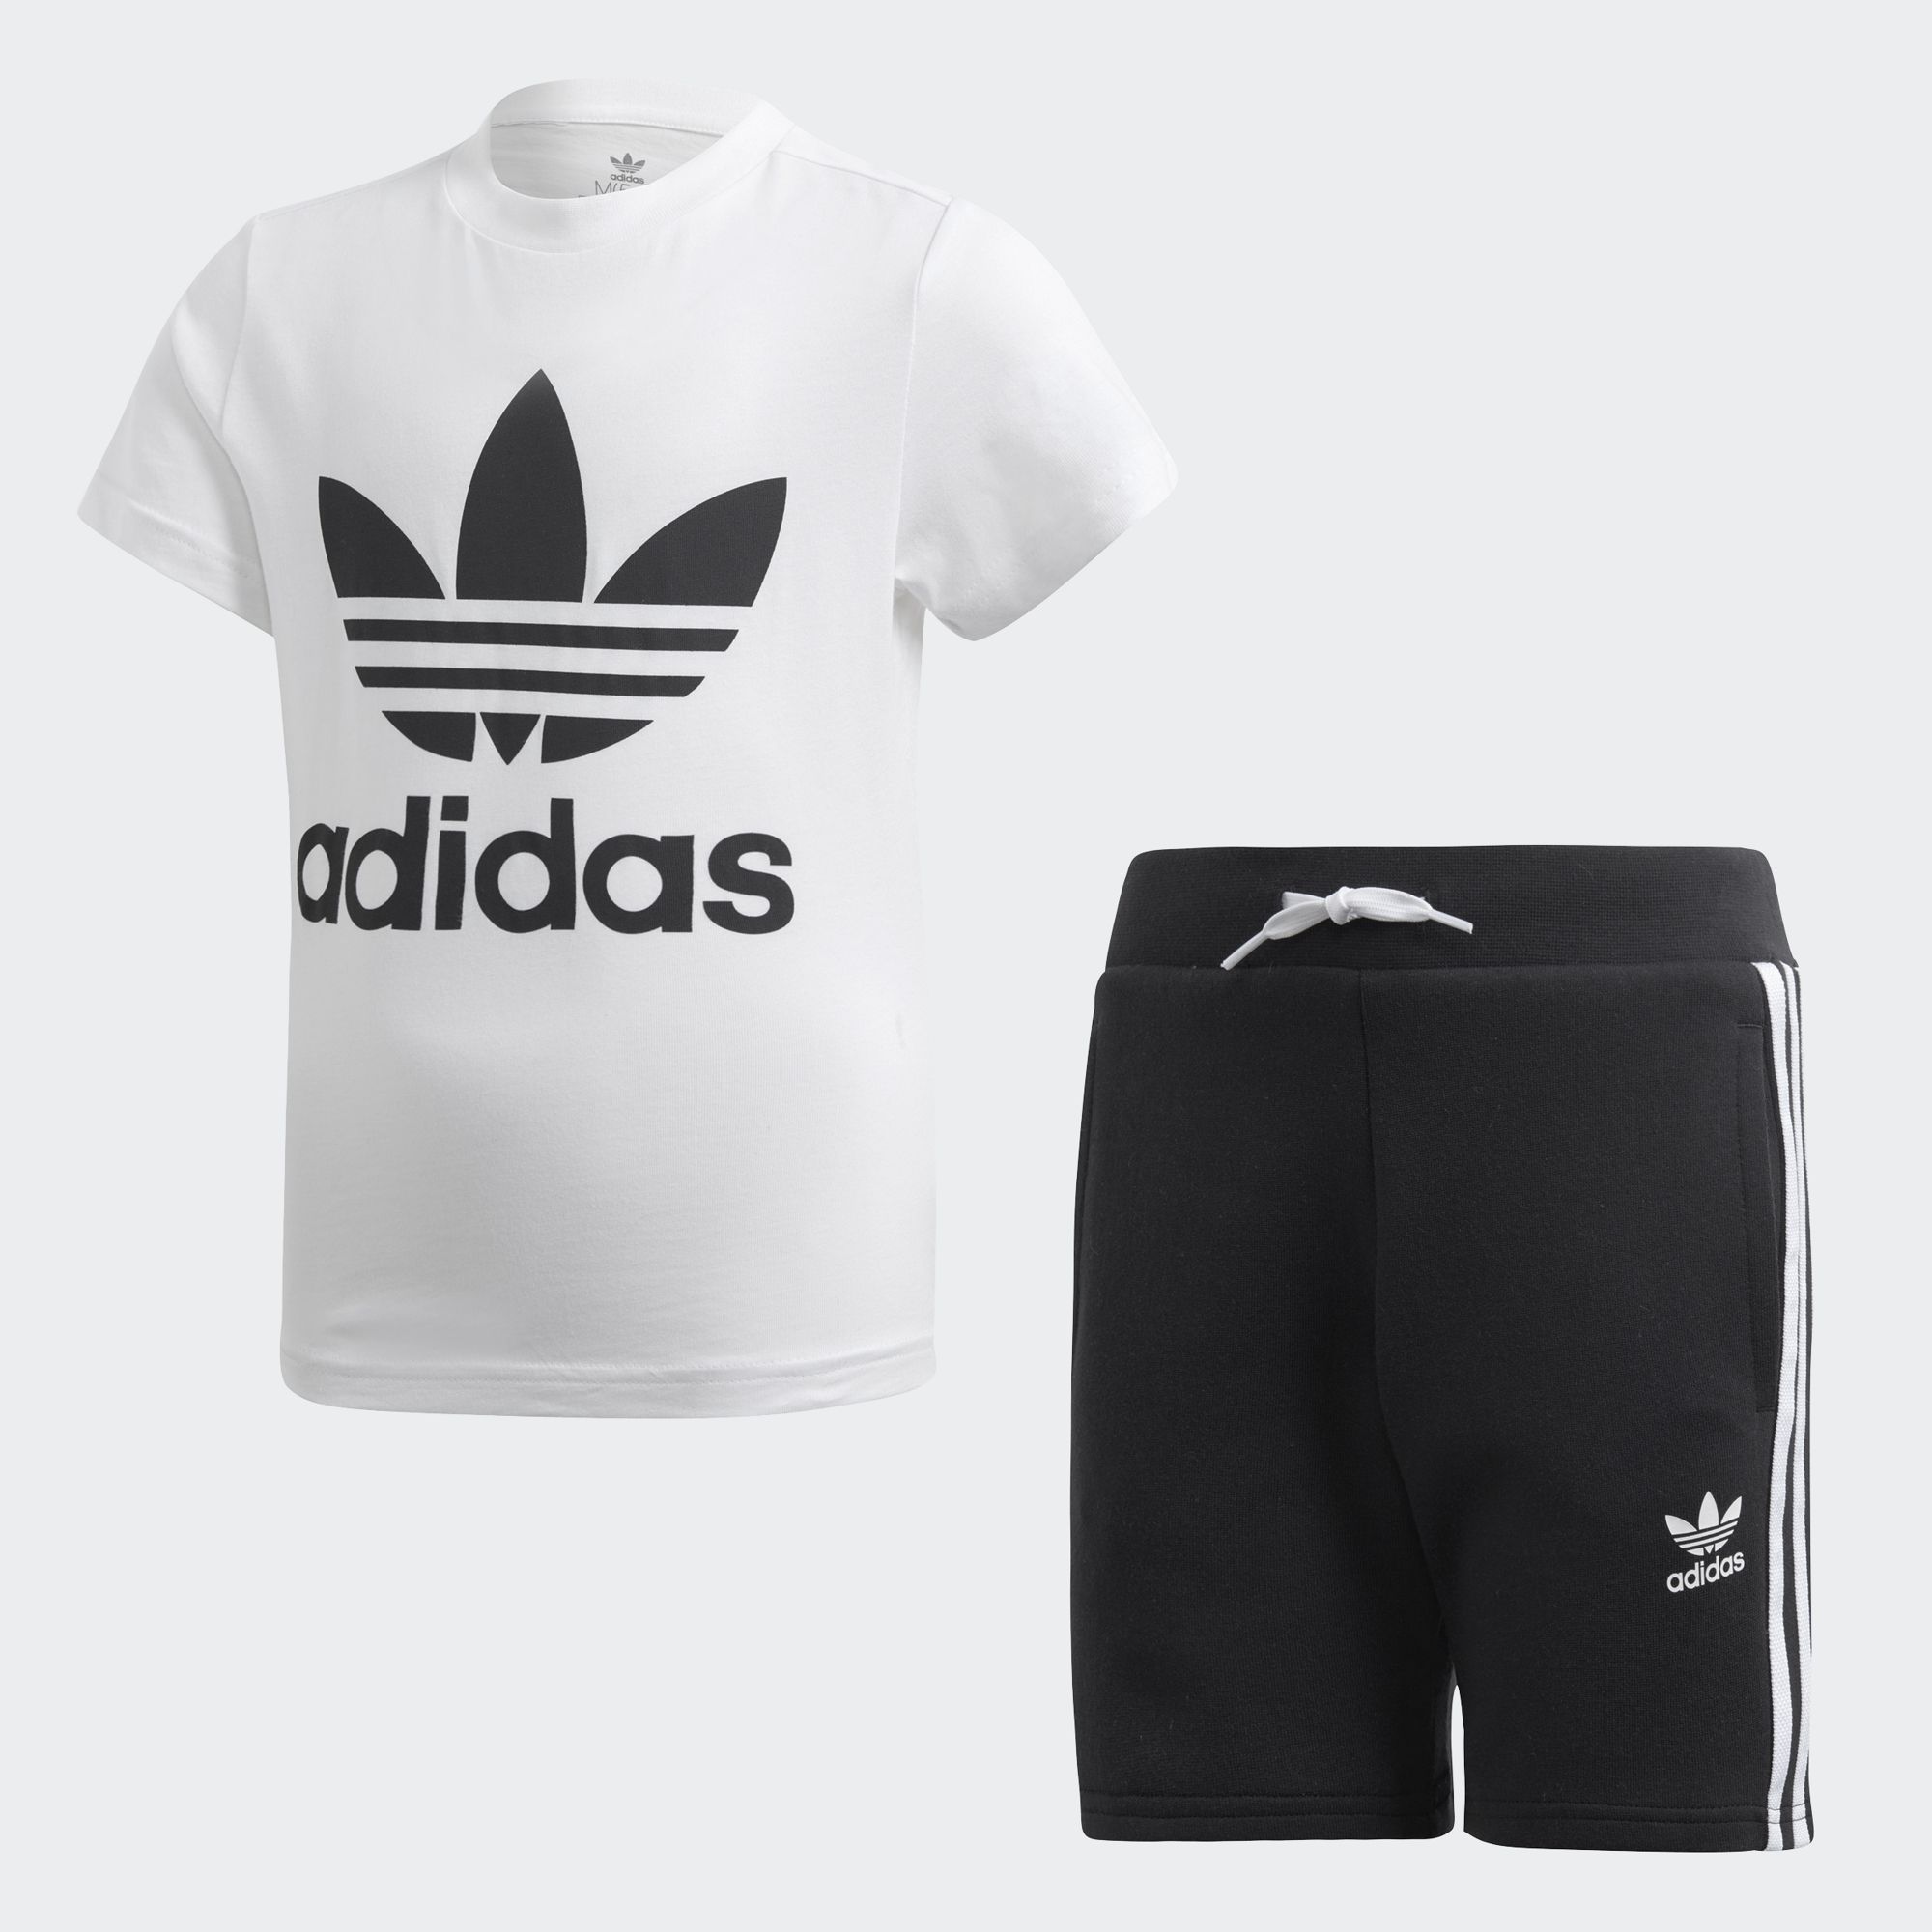 adidas ORIGINALS Trefoil Shorts Tee Set เด็ก ไม่ระบุ เพศ สีขาว DW9709